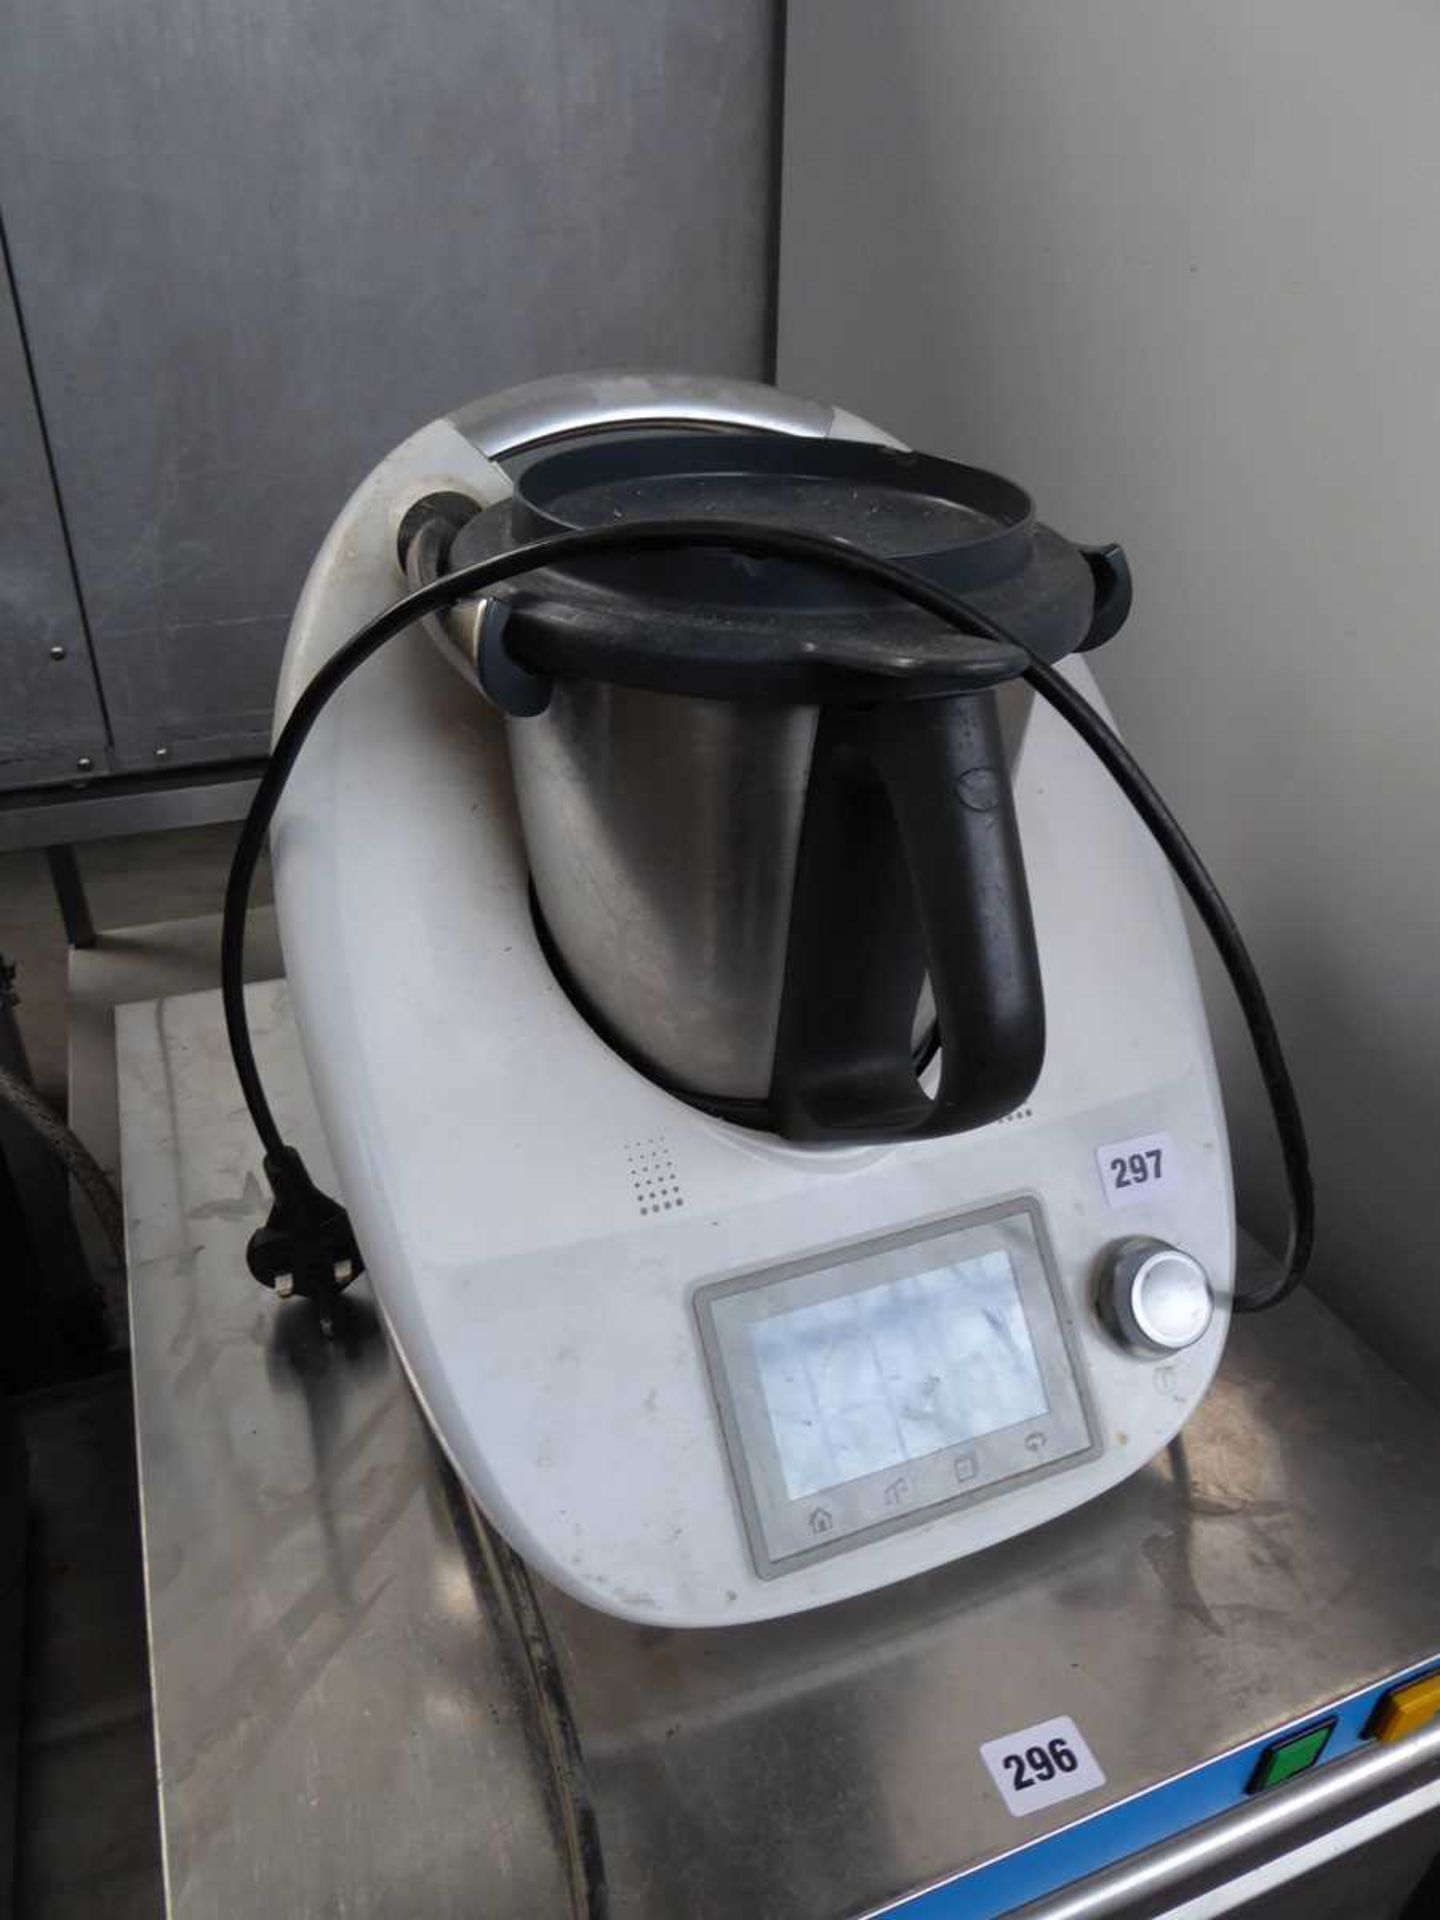 +VAT Thermomix kitchen appliance